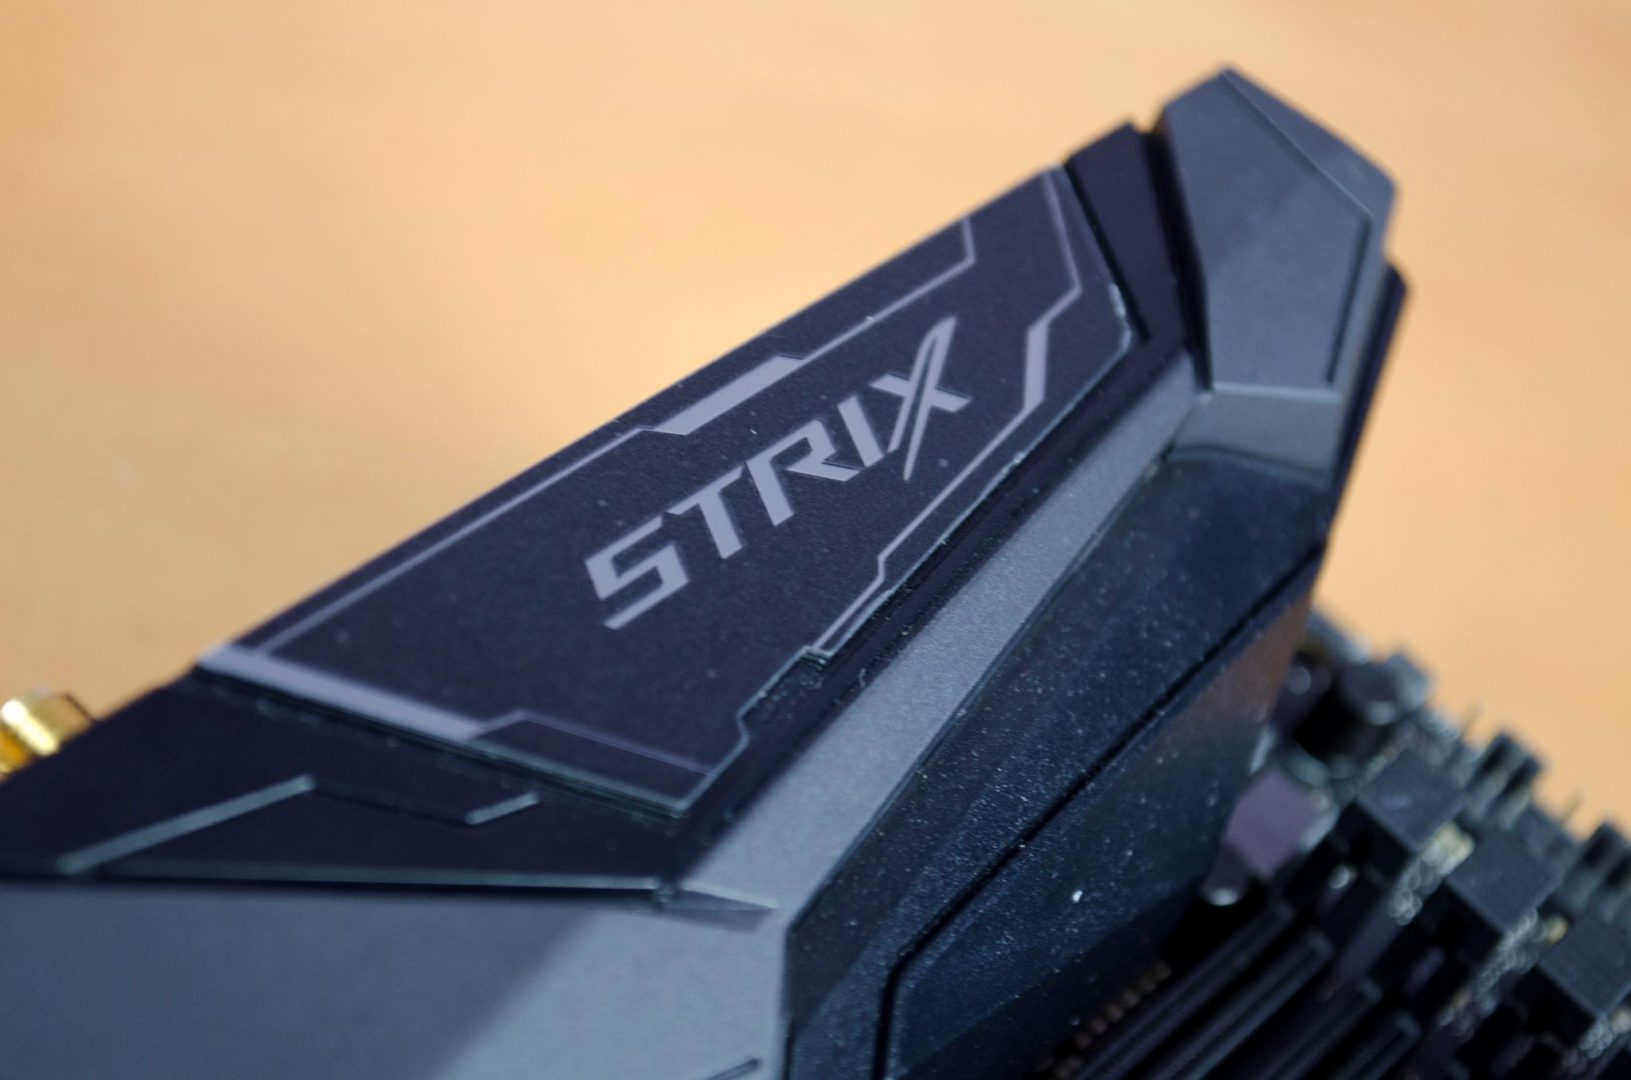 ASUS ROG STRIX X99 Gaming Motherboard Review